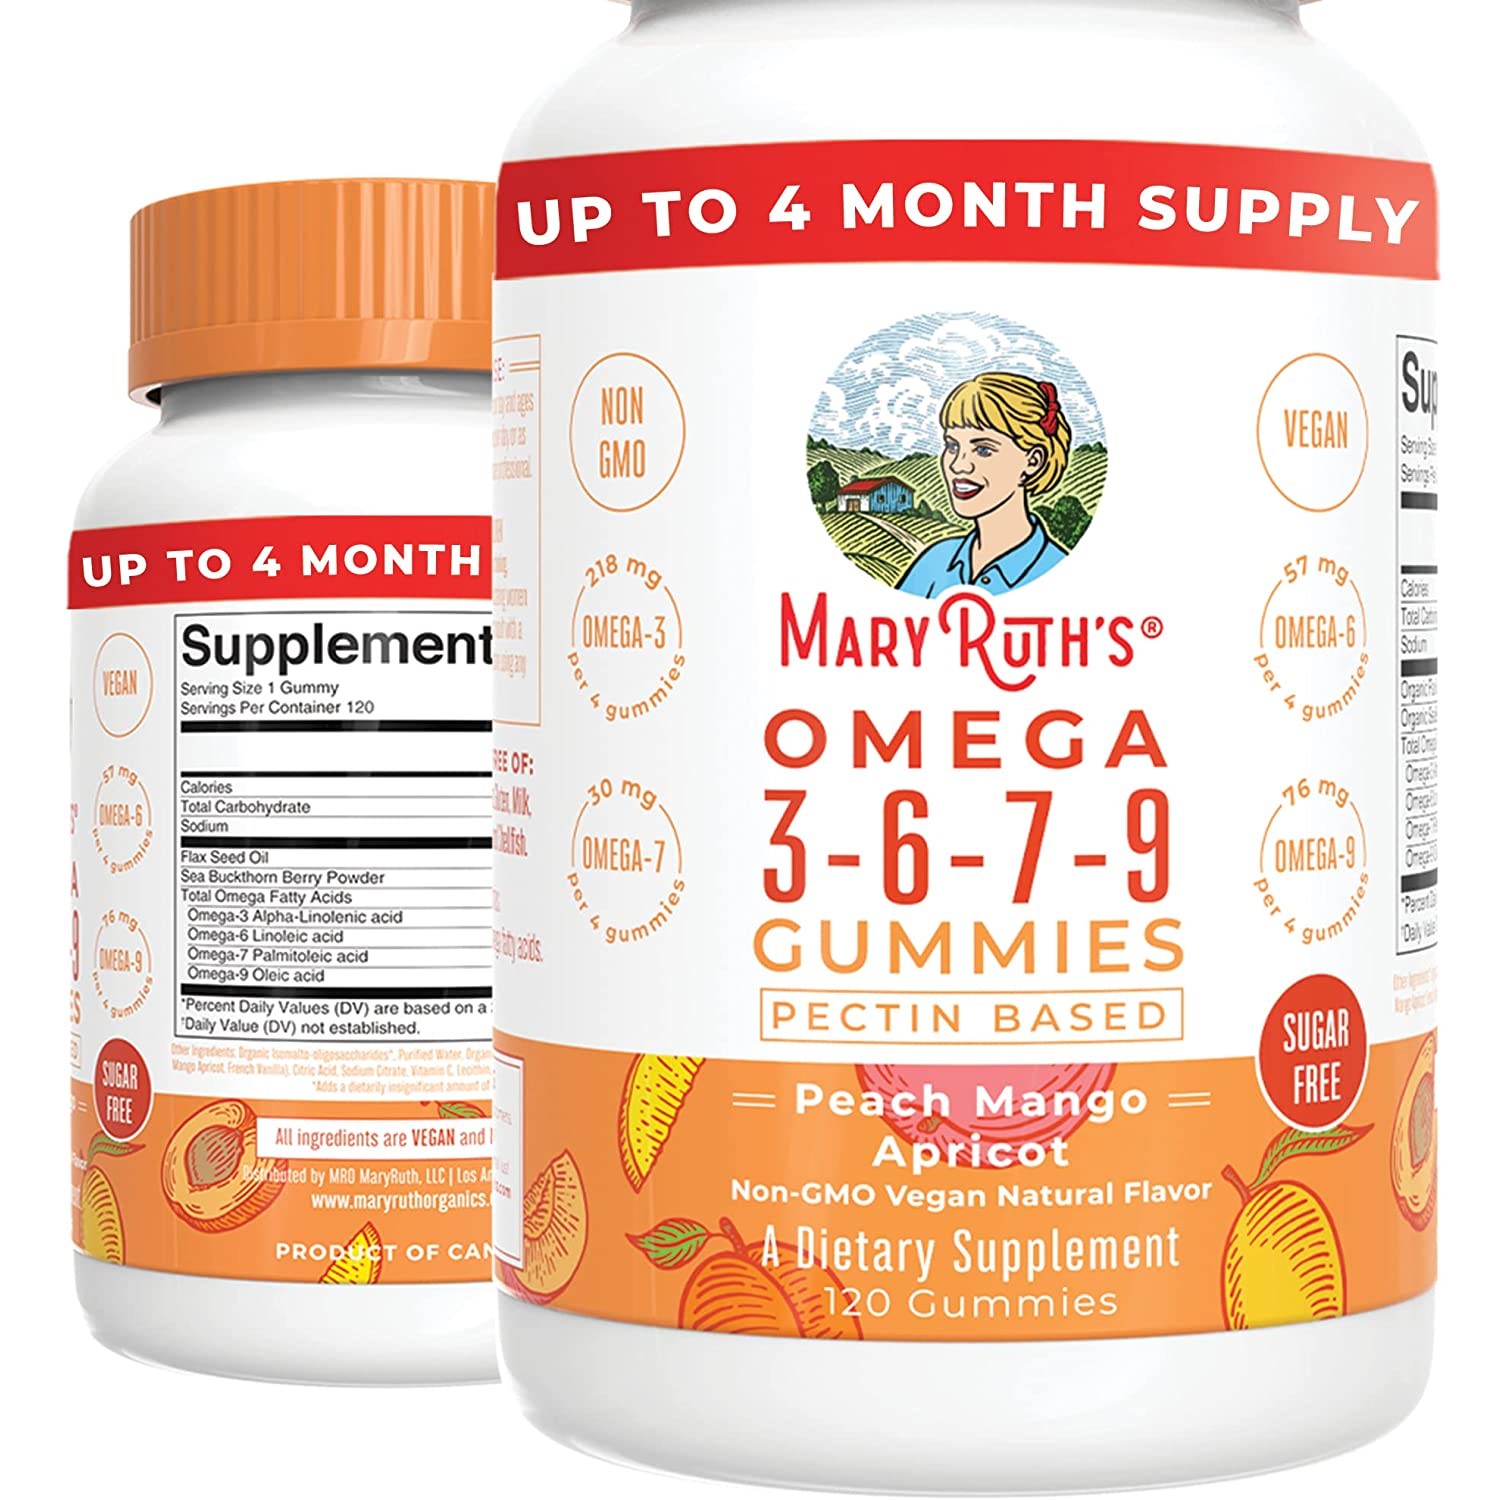 Mary Ruth’s Vegan Omega 3-6-7-9 Gummies